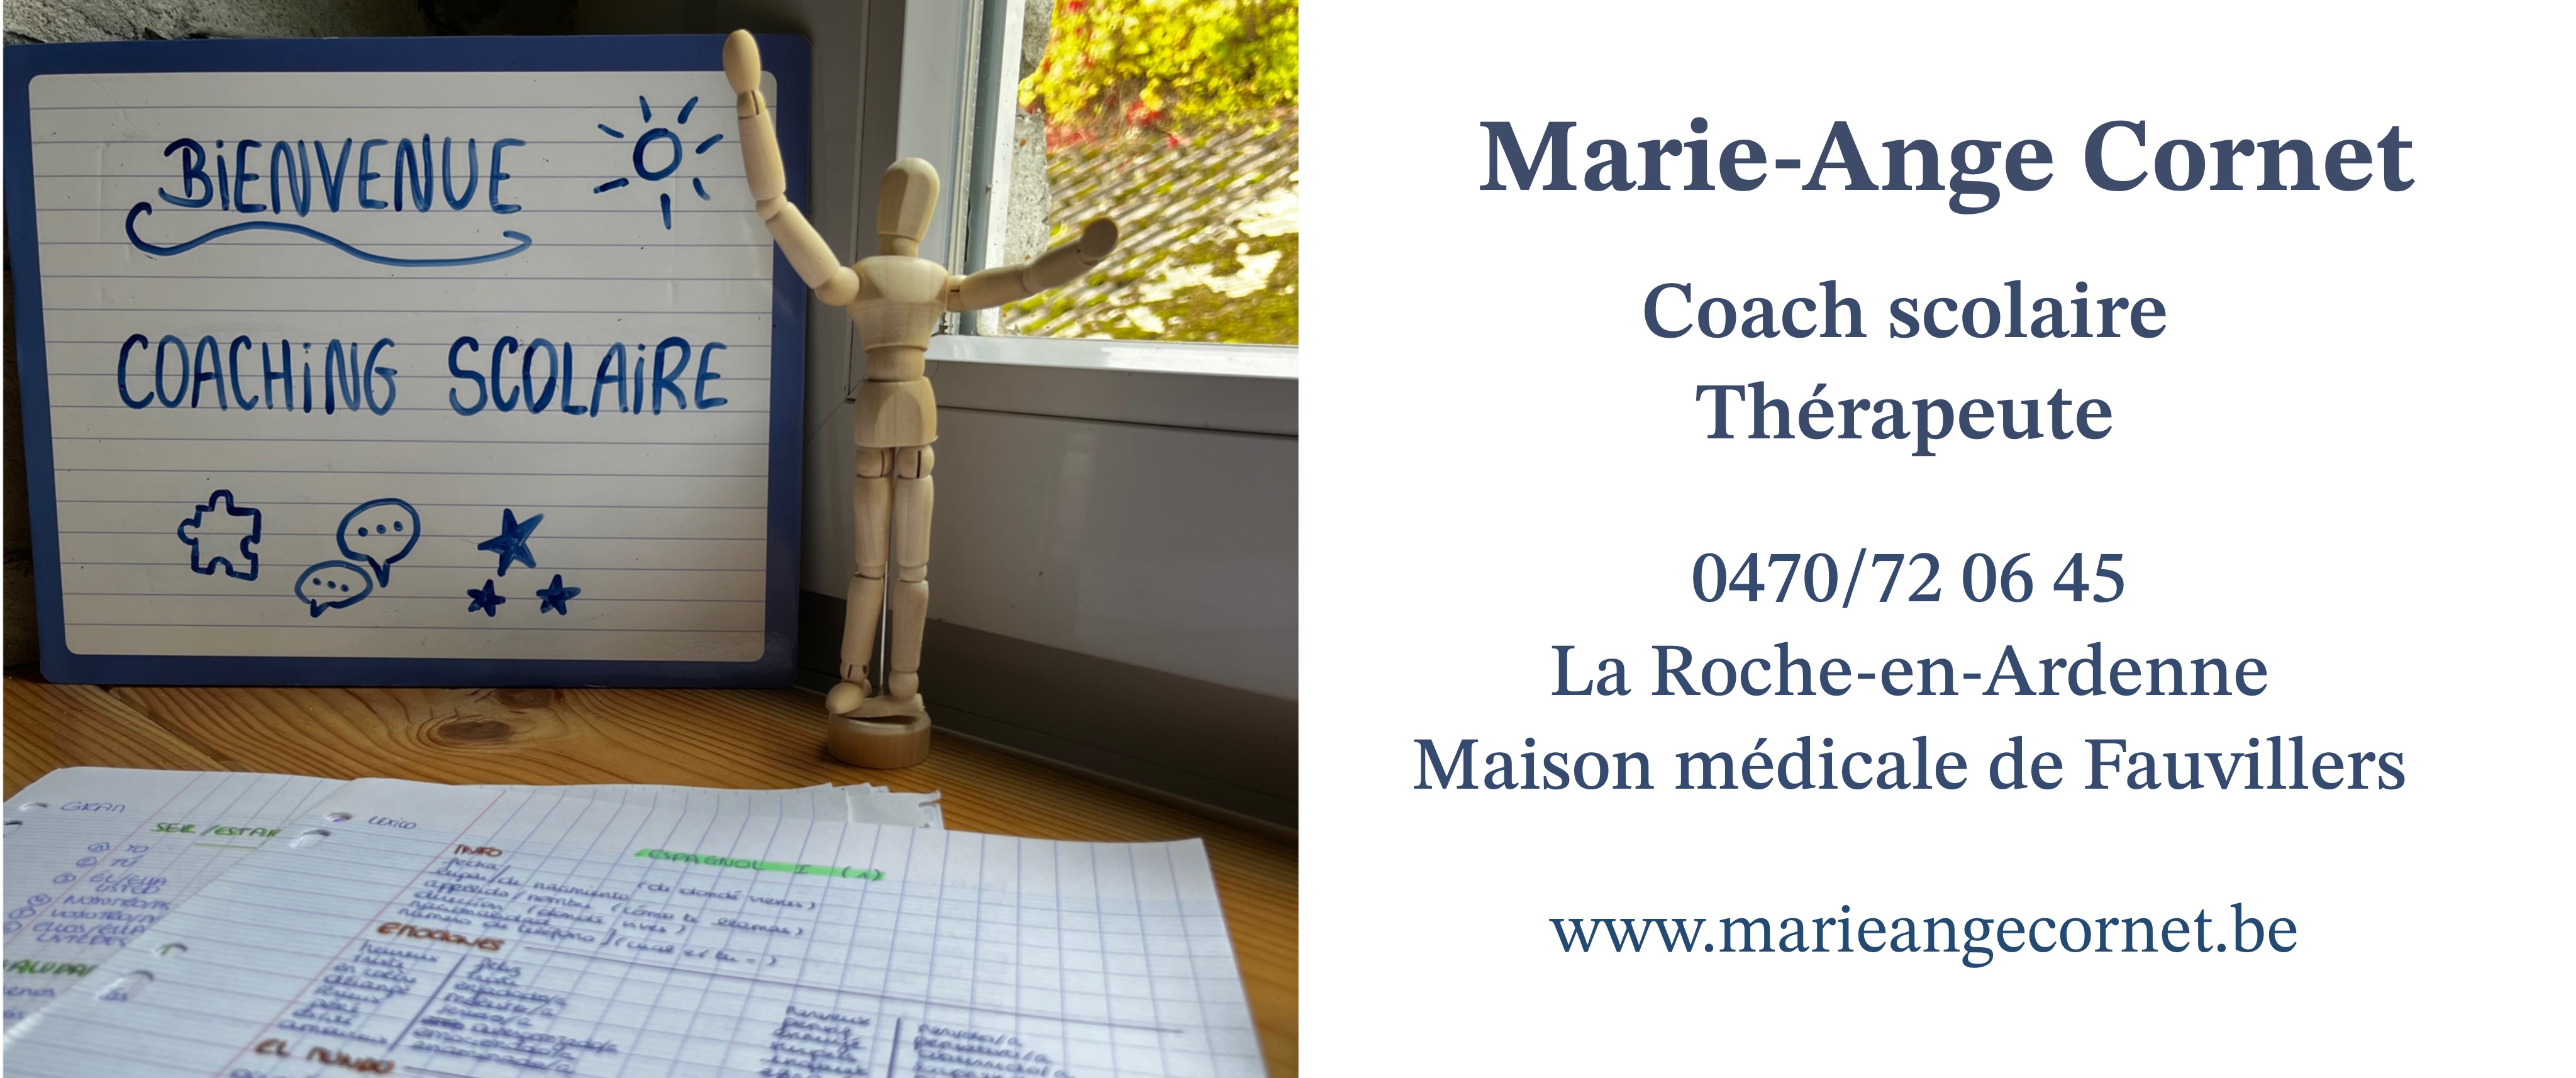 Cornet Marie-Ange – Coach Scolaire